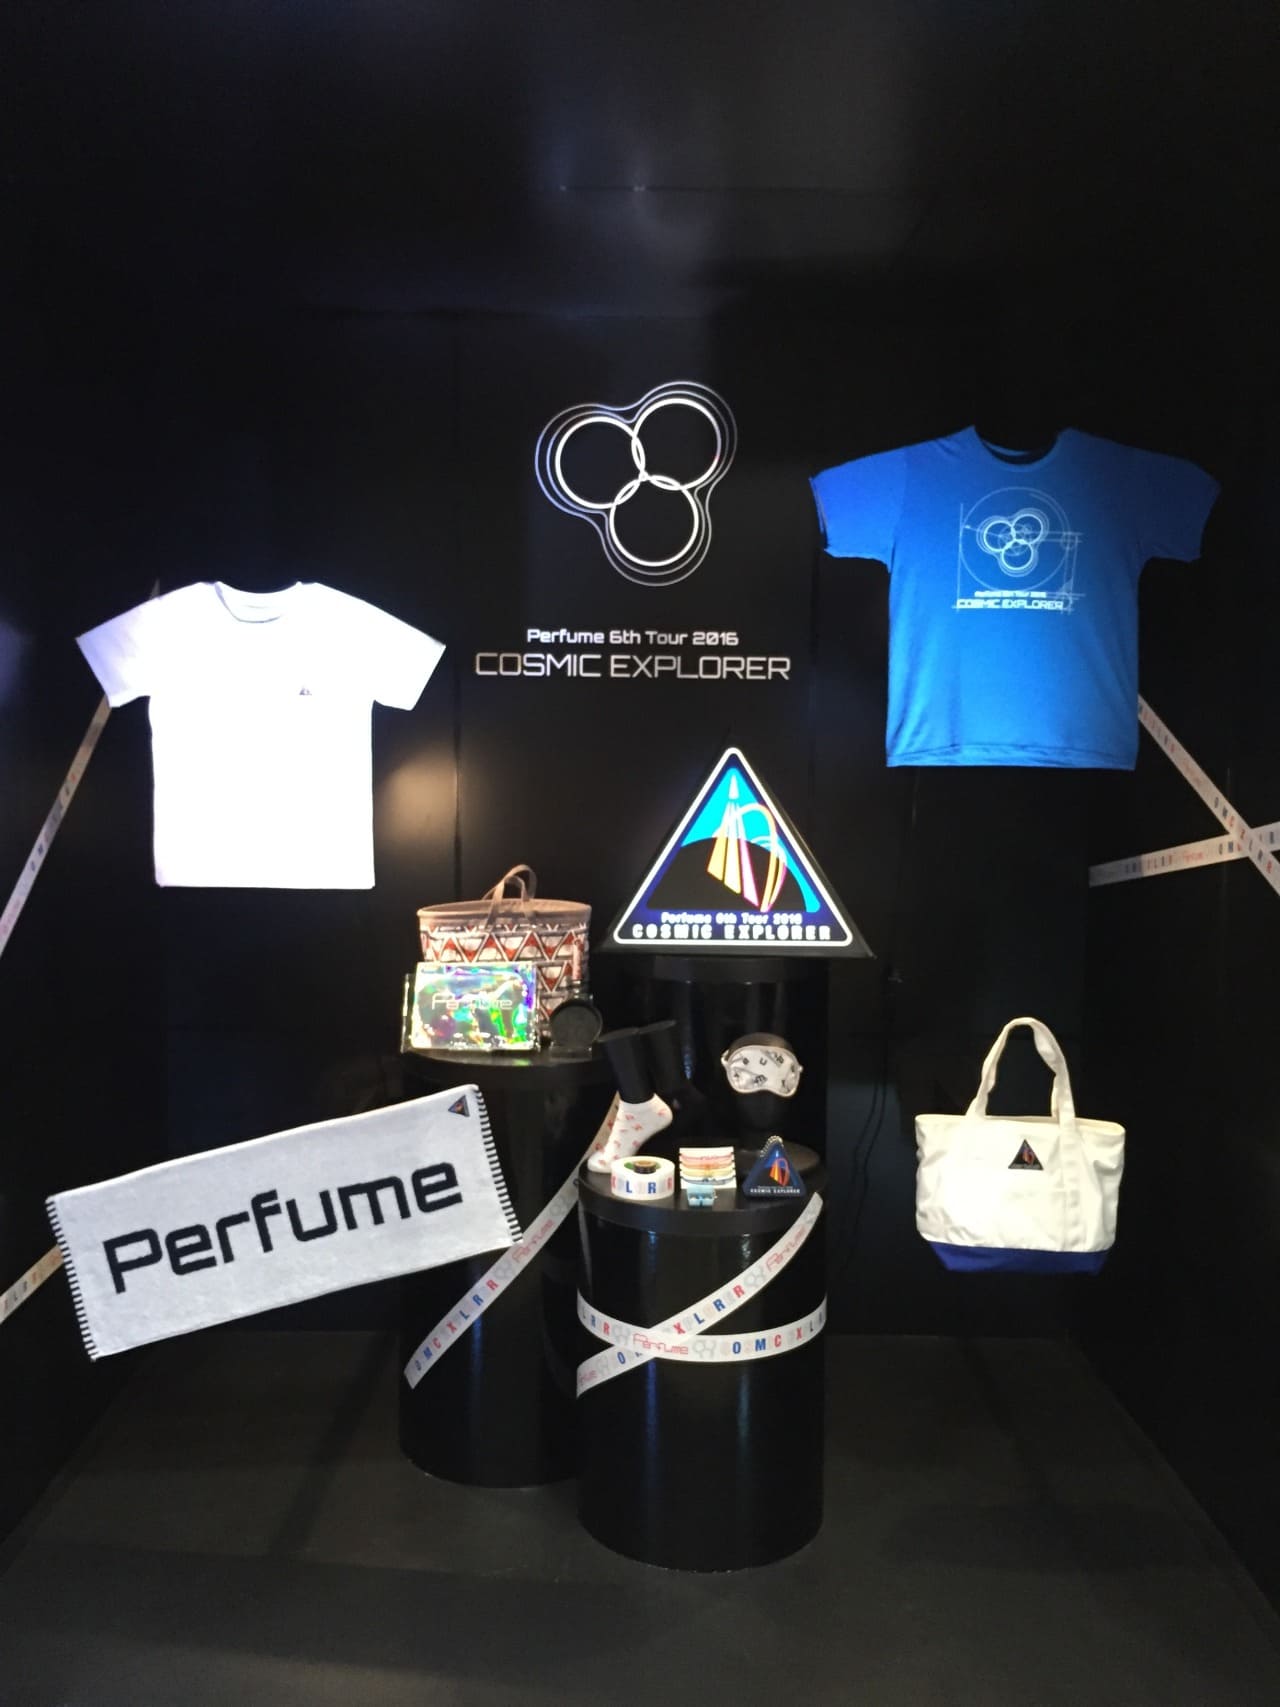 Perfume 6th Tour 2016 ｢COSMIC EXPLORER｣